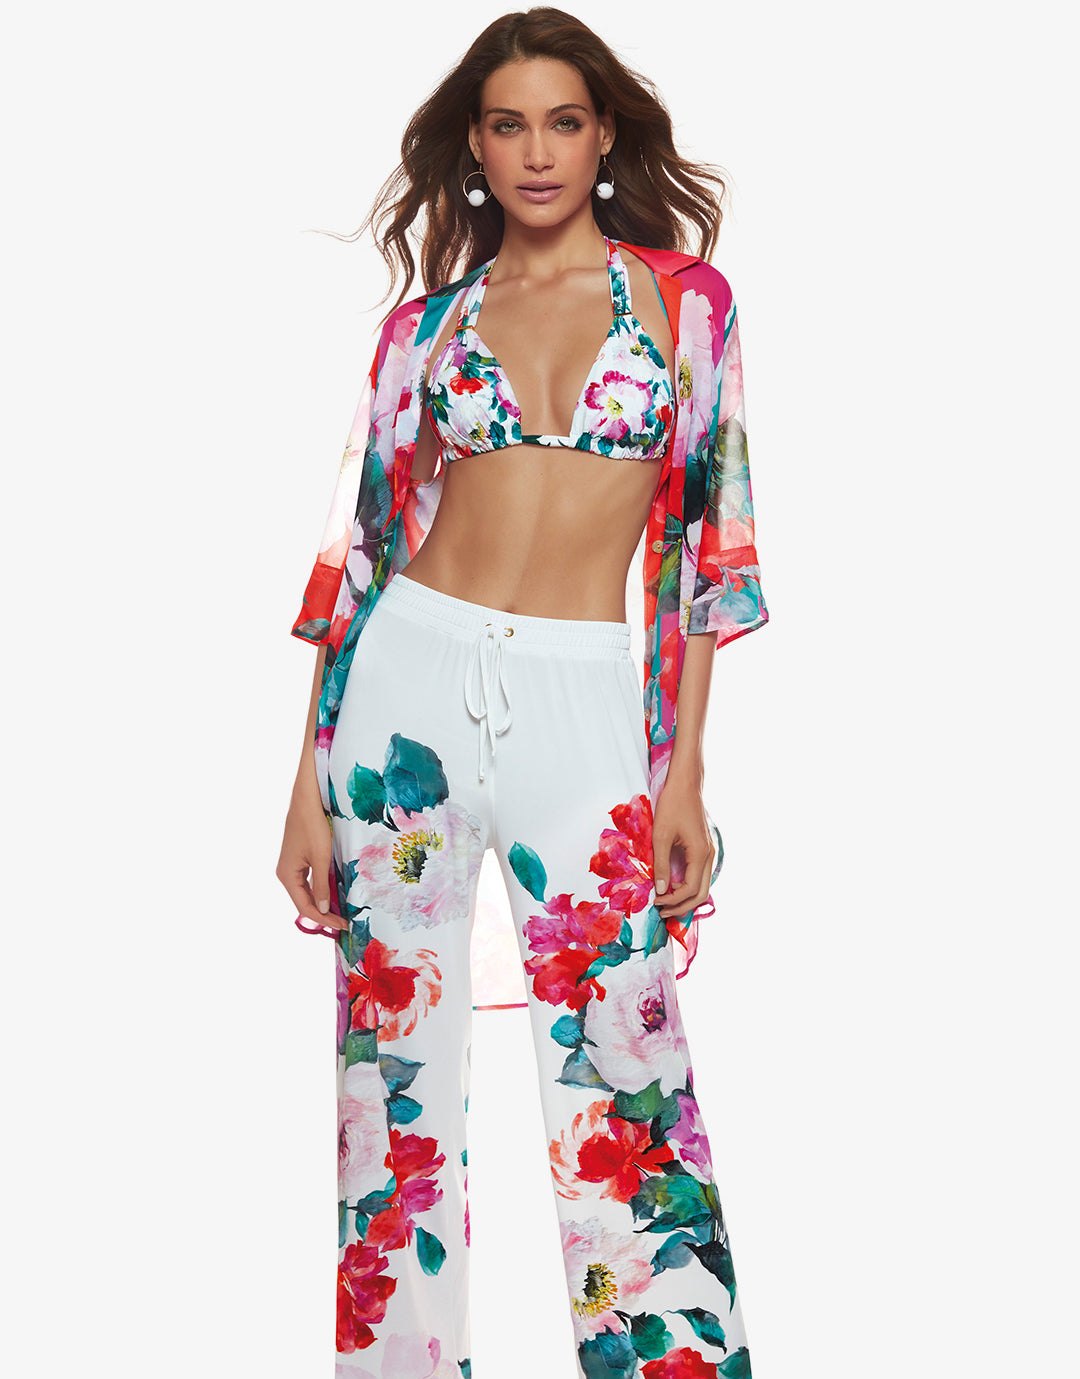 Melania Beach Trouser - Floral Multi - Simply Beach UK